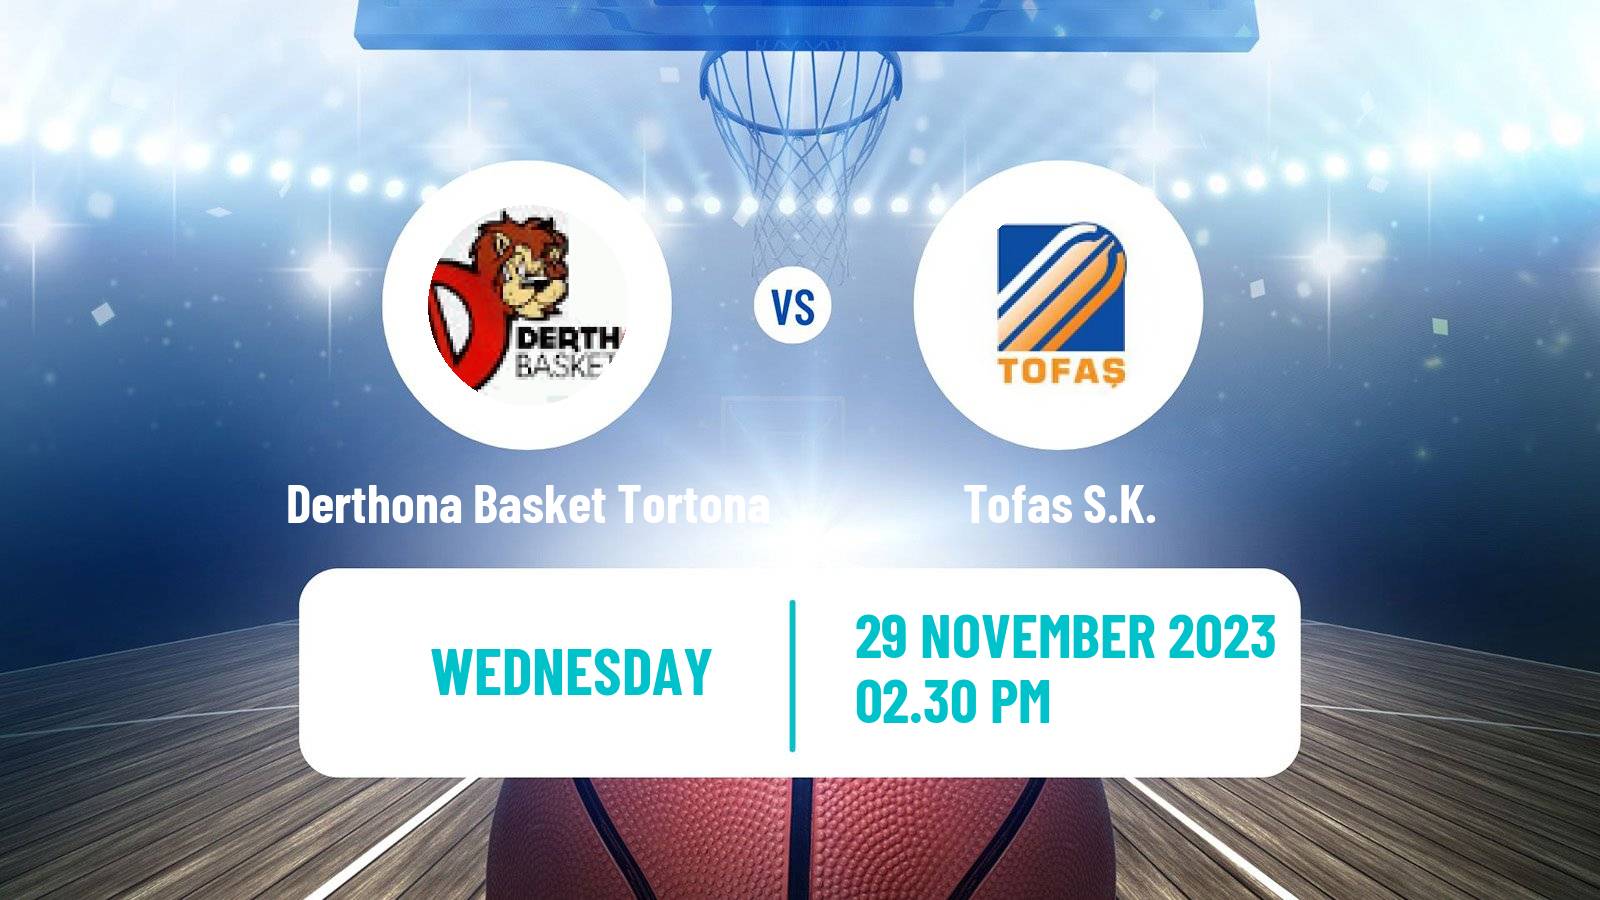 Basketball Champions League Basketball Derthona Basket Tortona - Tofaş